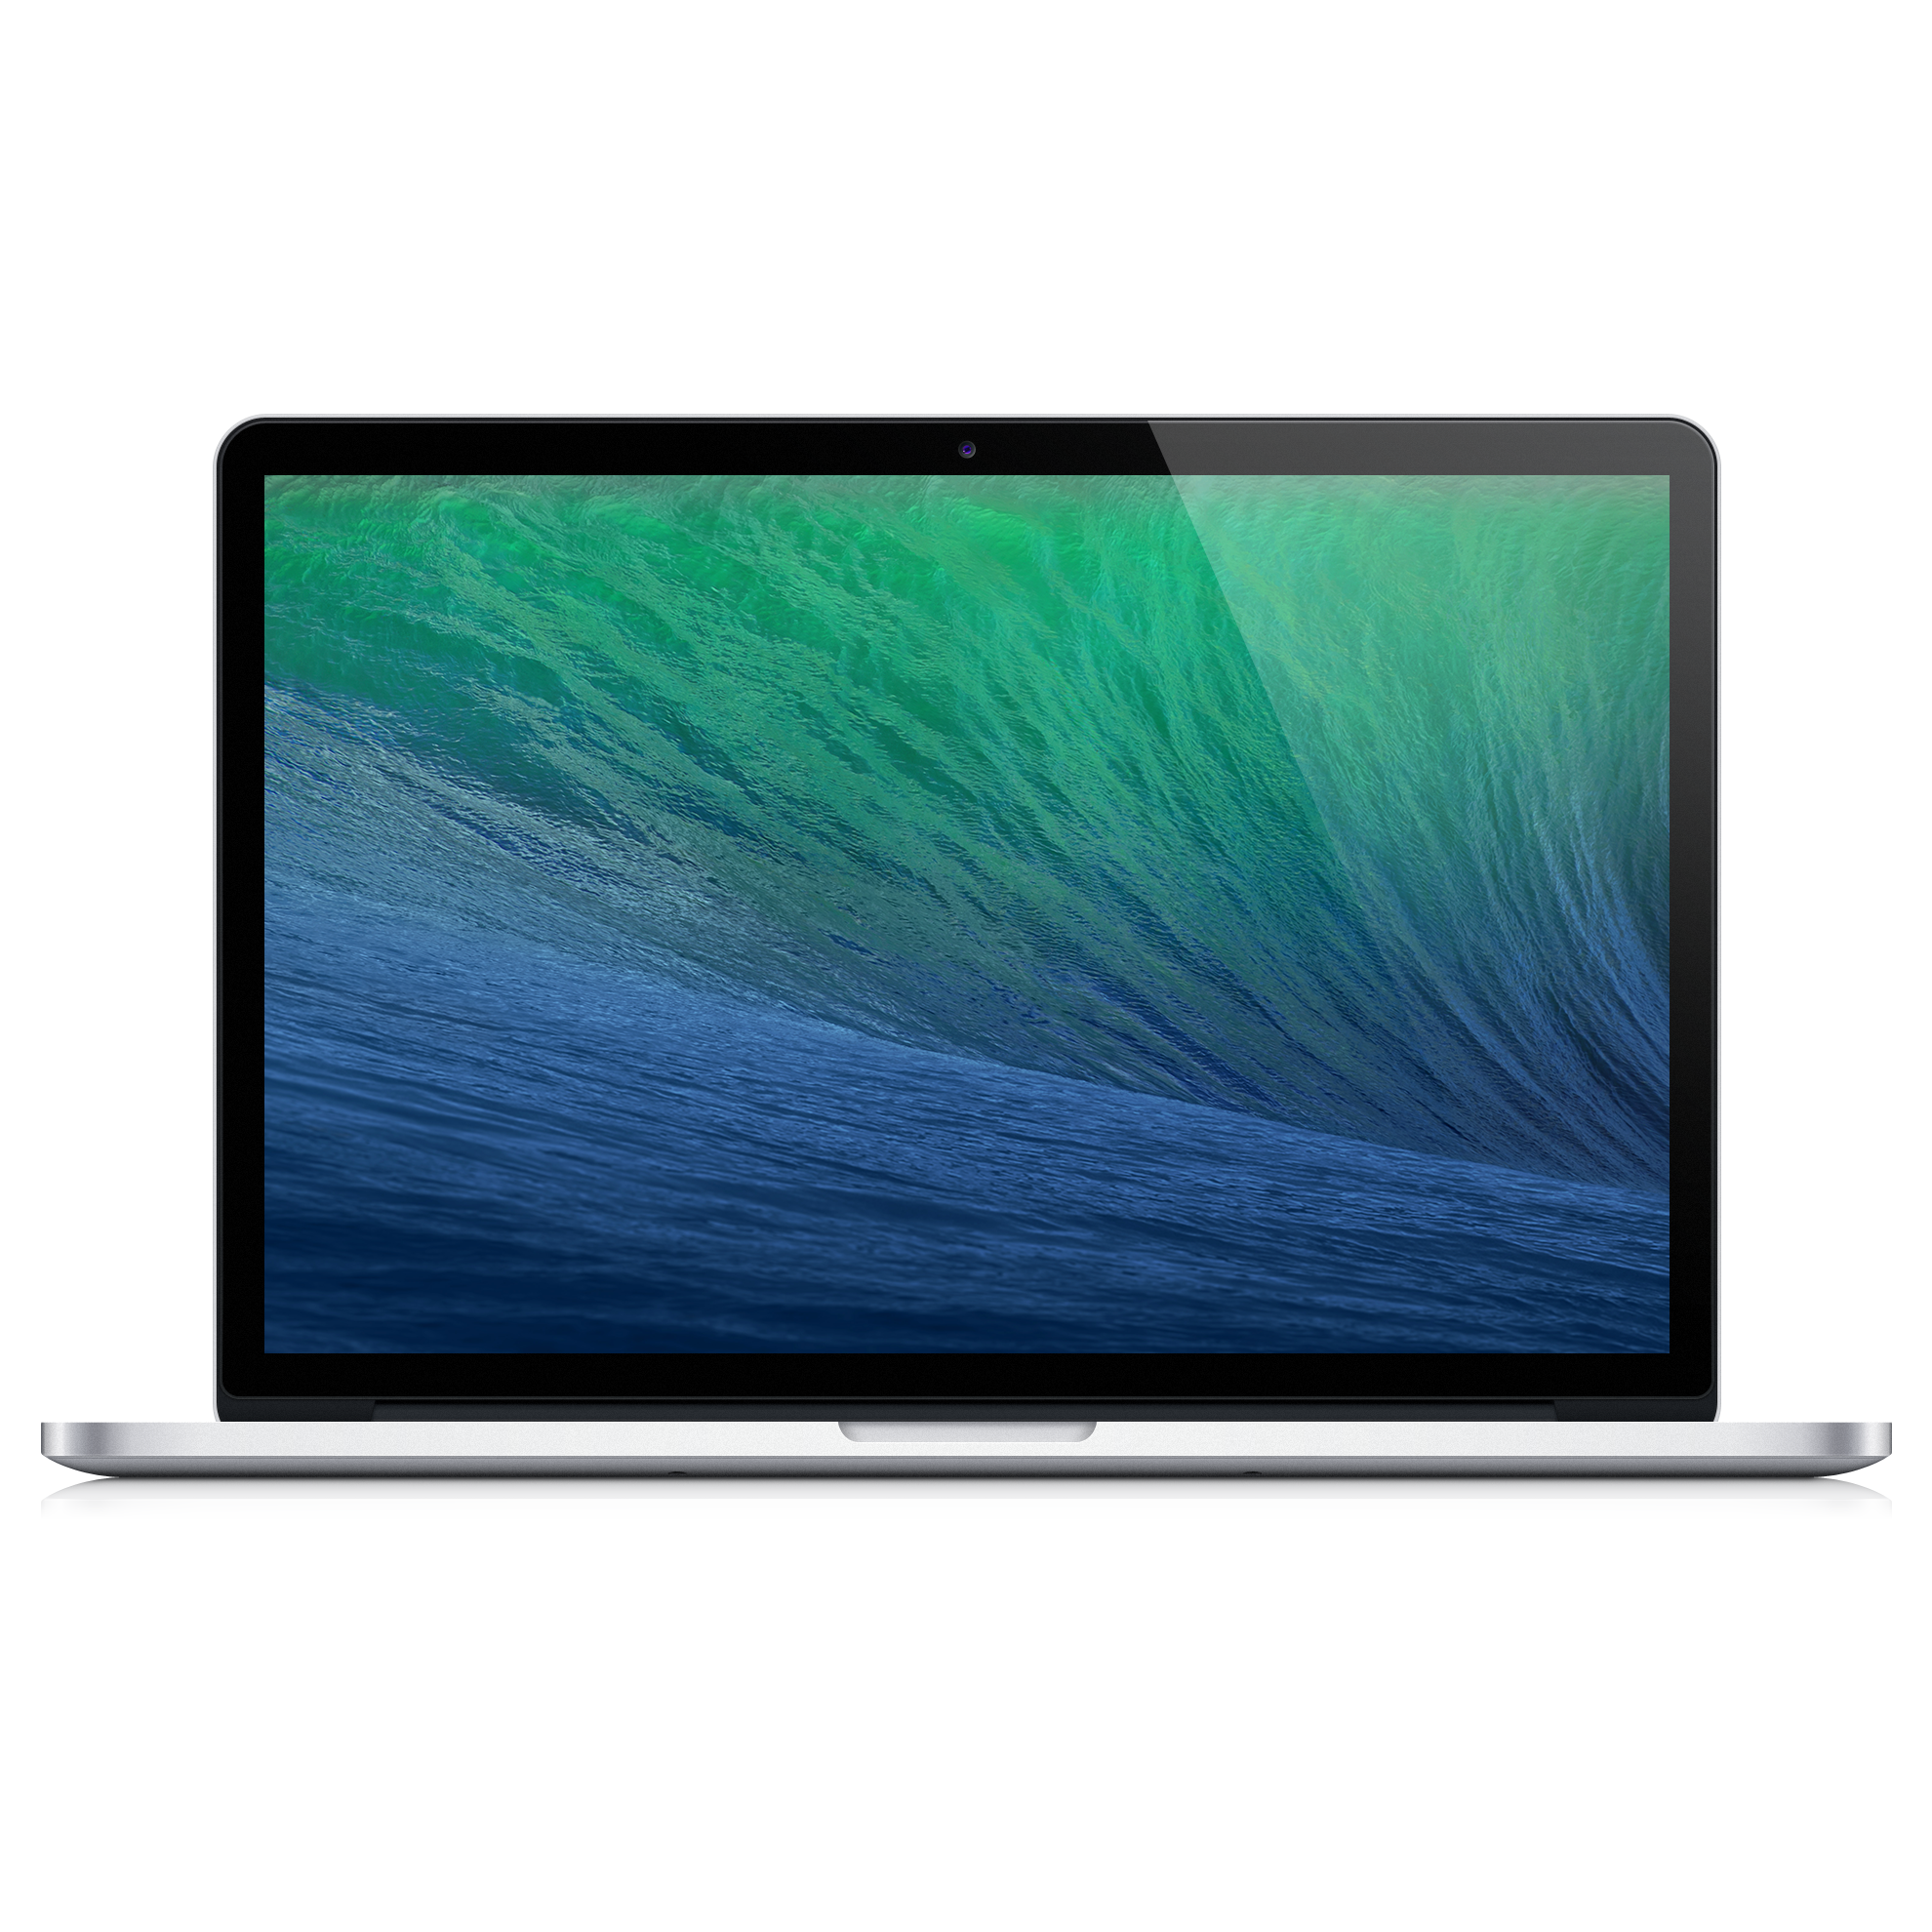 Laptop clipart macbook air. Png images transparent free